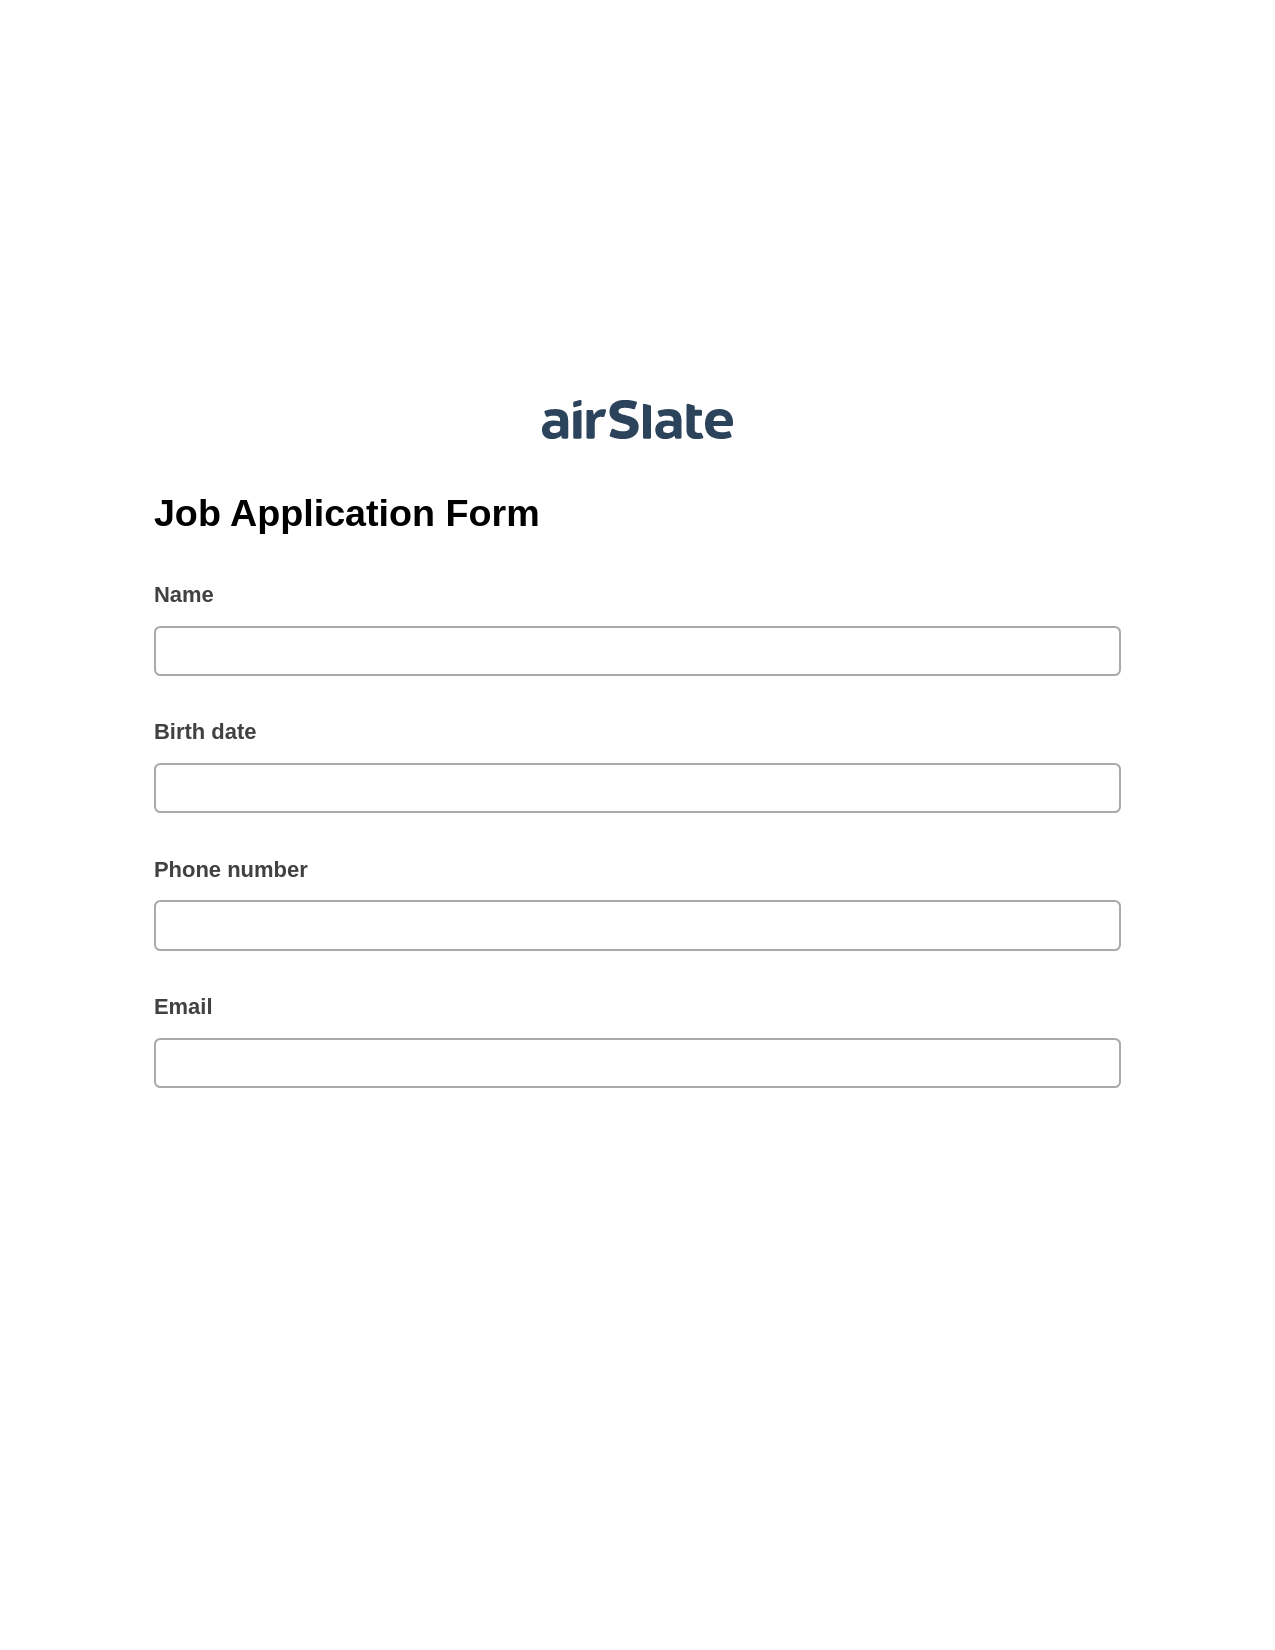 Job Application Form Pre-fill Slate from MS Dynamics 365 Records Bot, SendGrid send Campaign bot, Slack Two-Way Binding Bot